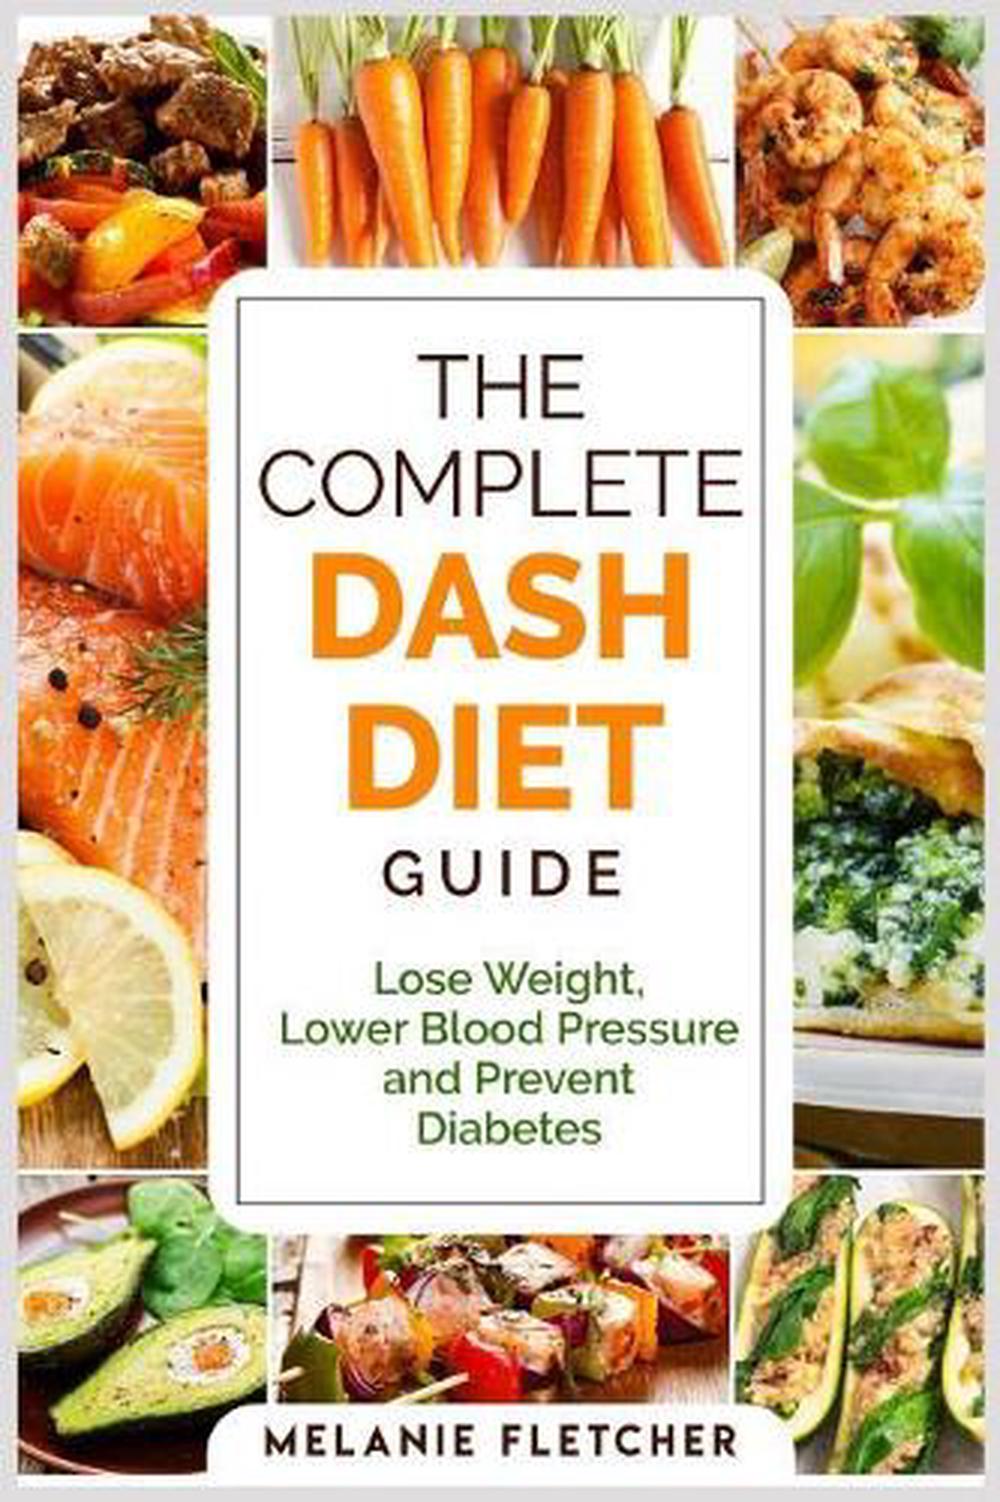 dash diet for prediabetes